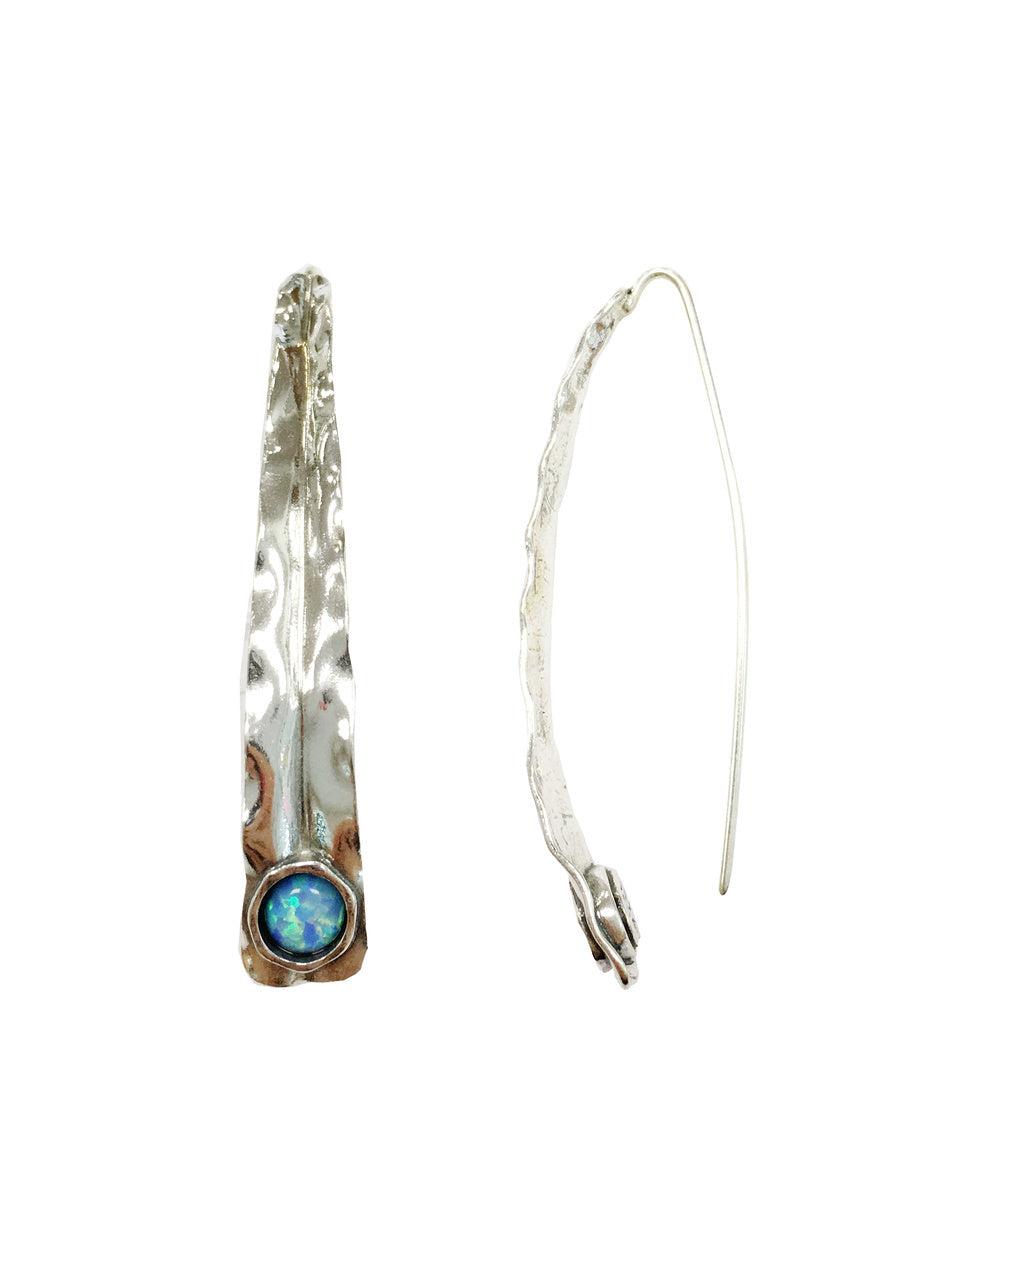 Silver and Opal Earrings - The Nancy Smillie Shop - Art, Jewellery & Designer Gifts Glasgow